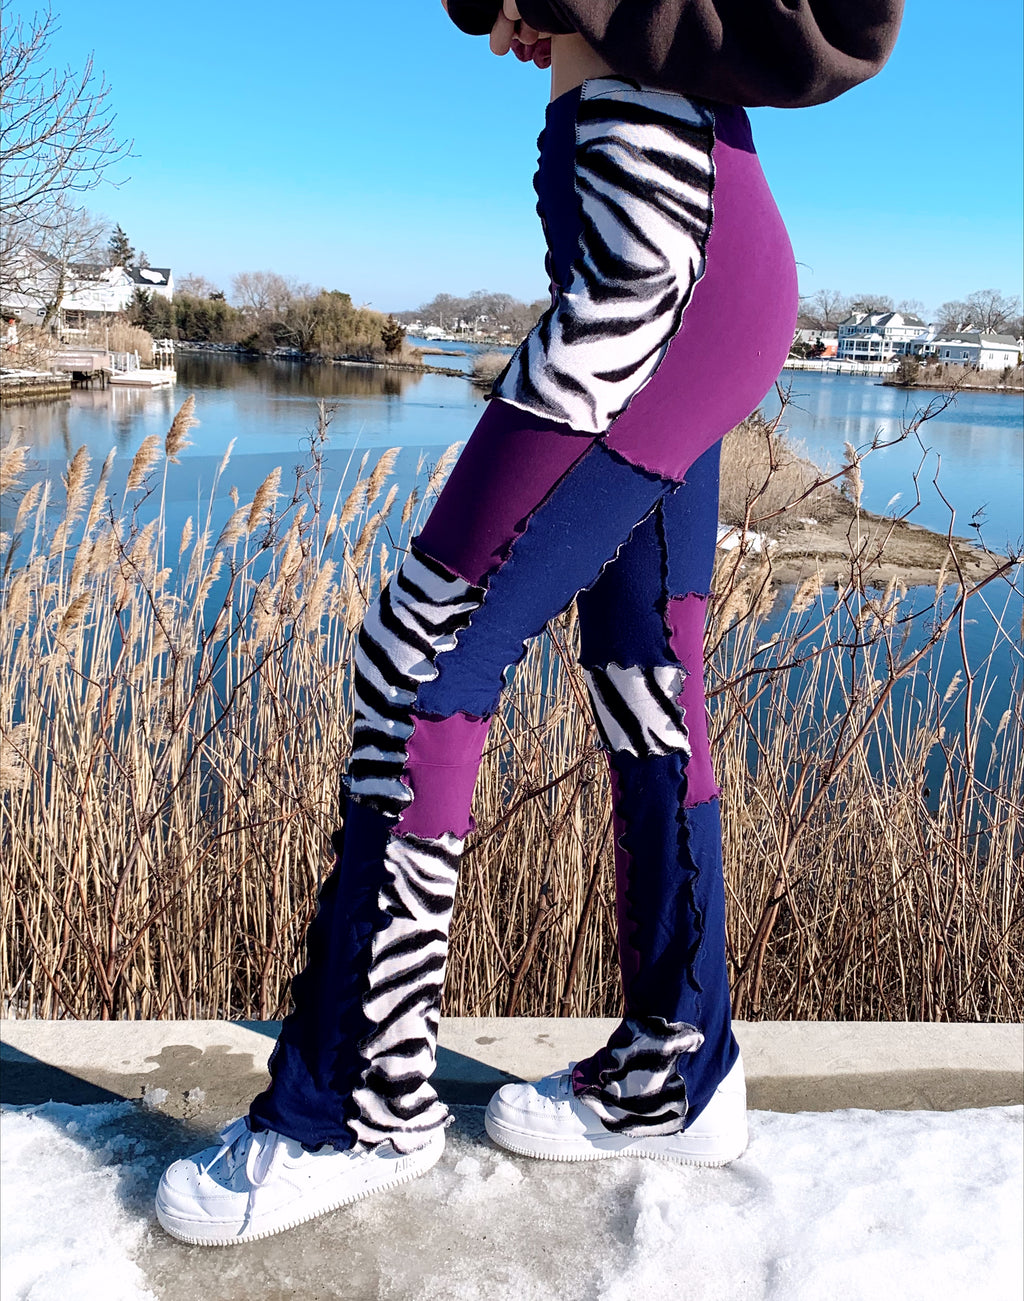 zebra purple & blue flares